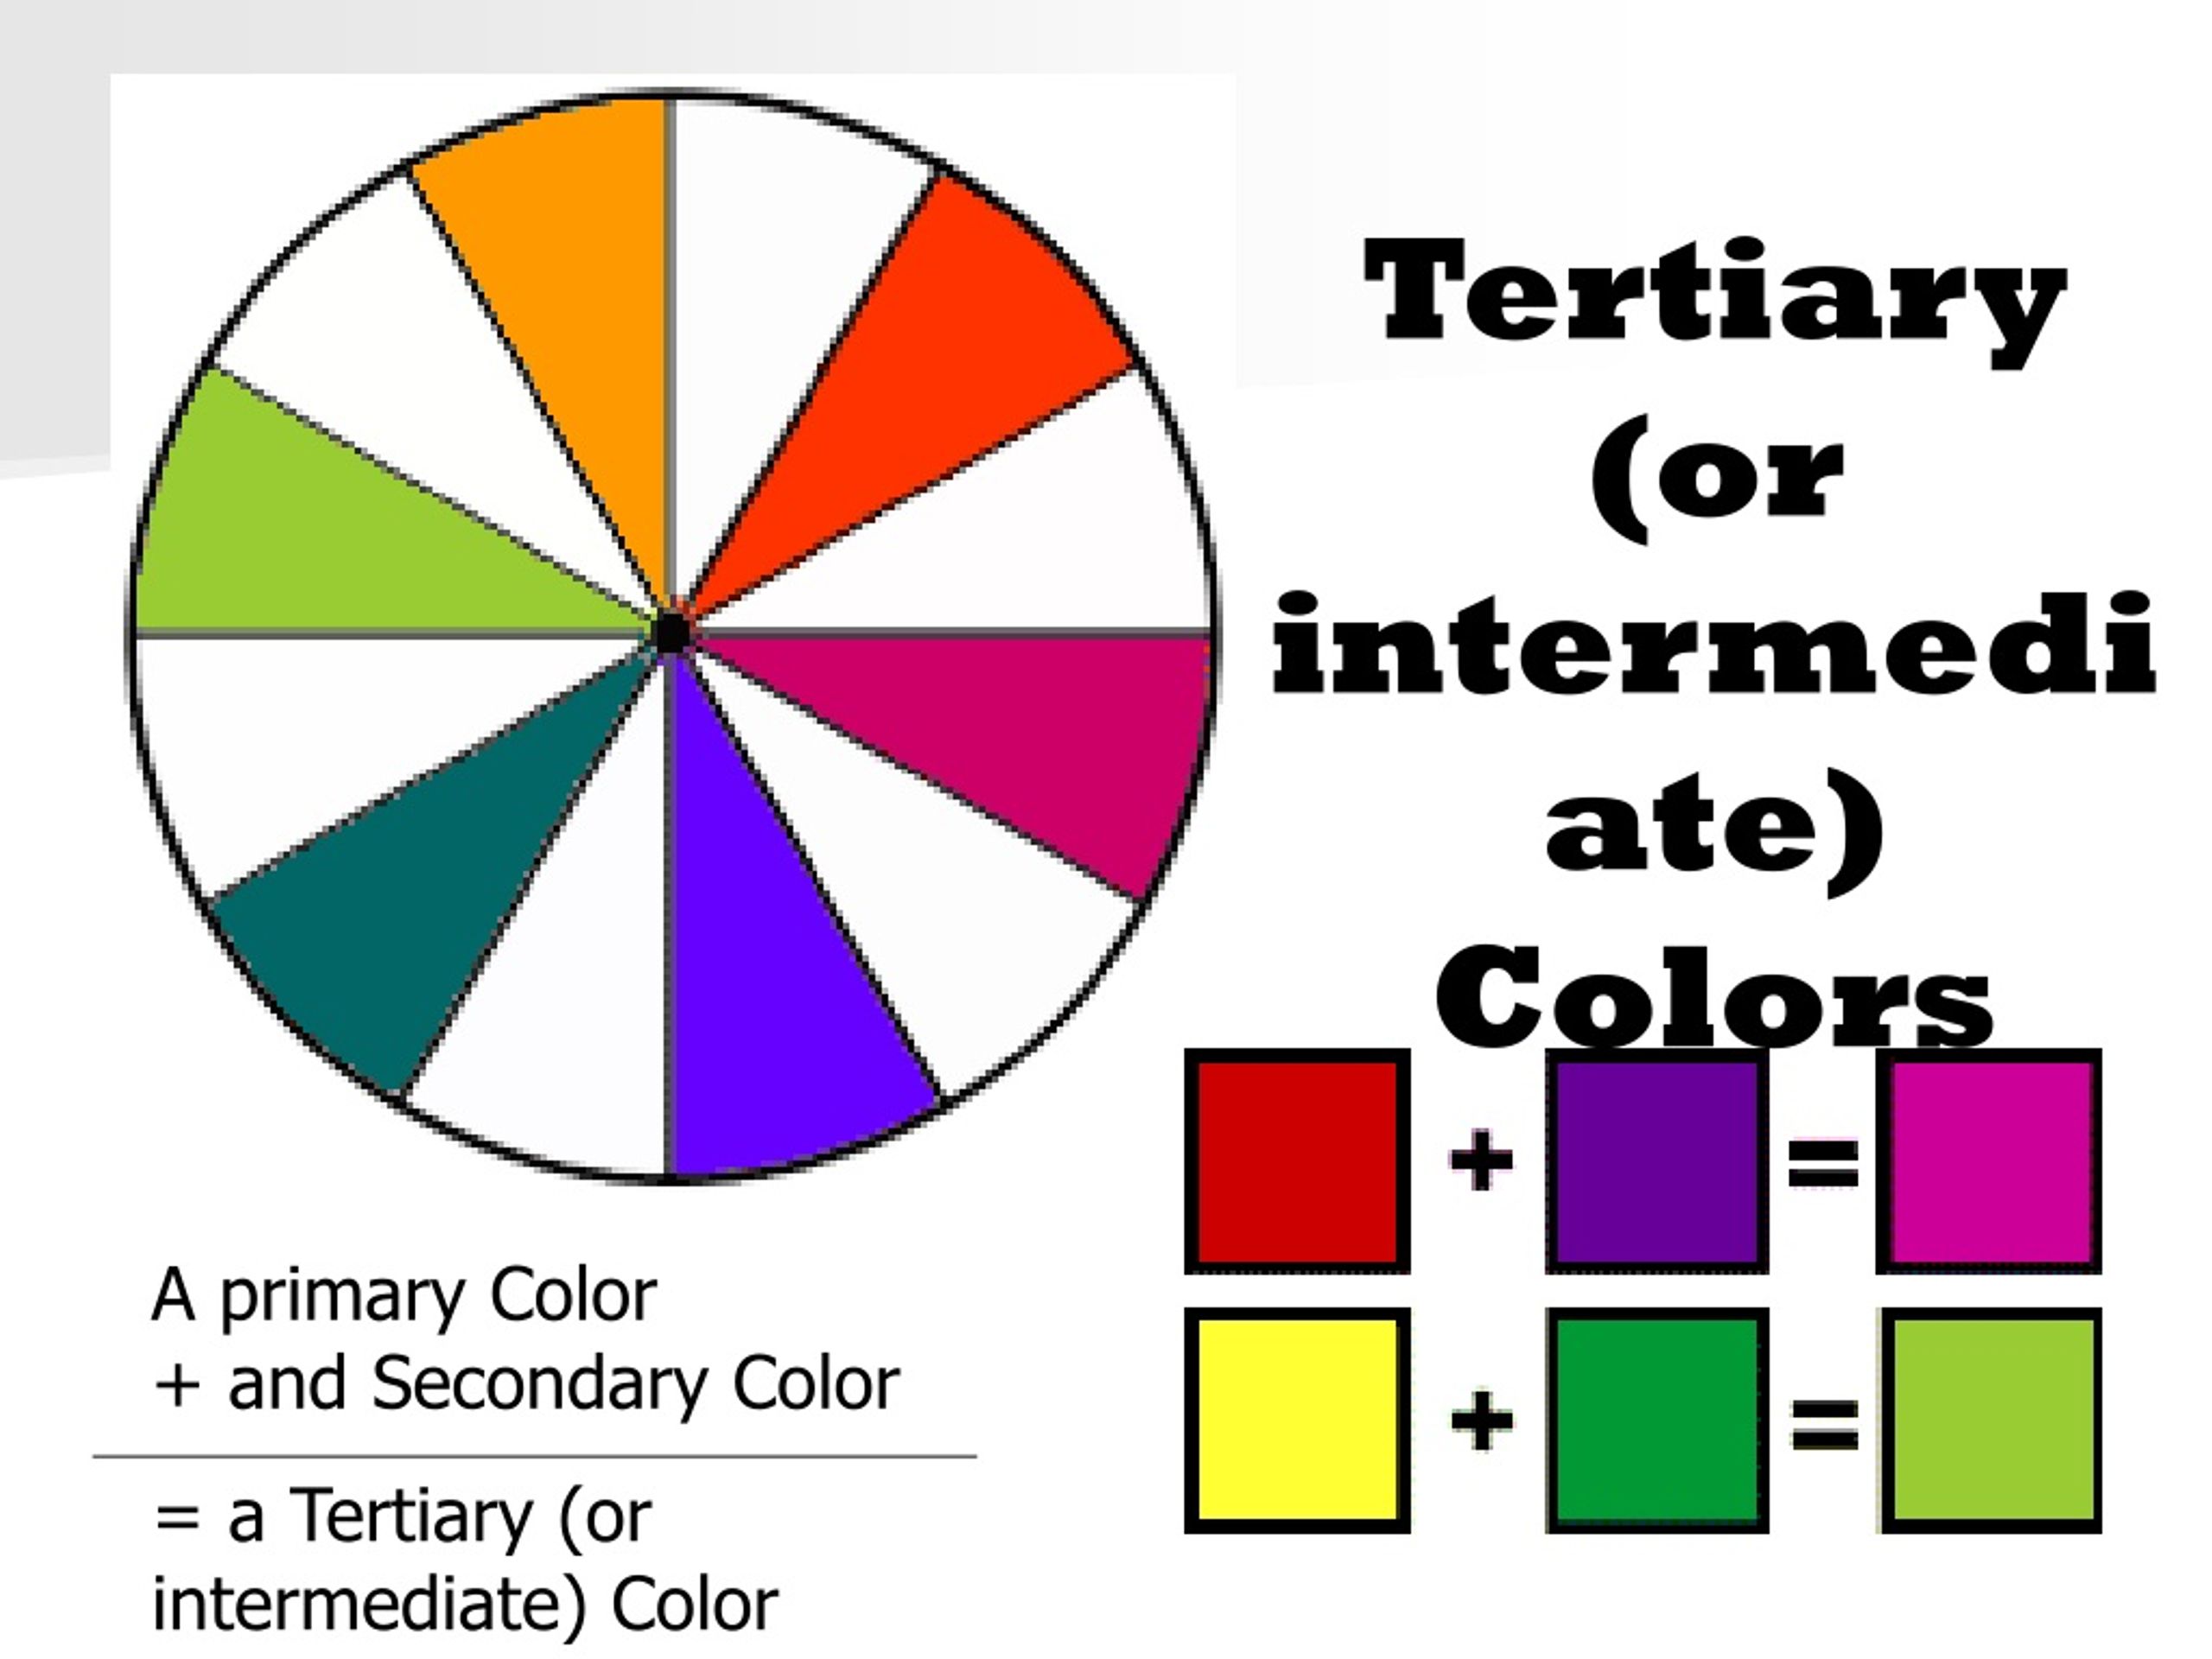 intermediate or tertiary colors are